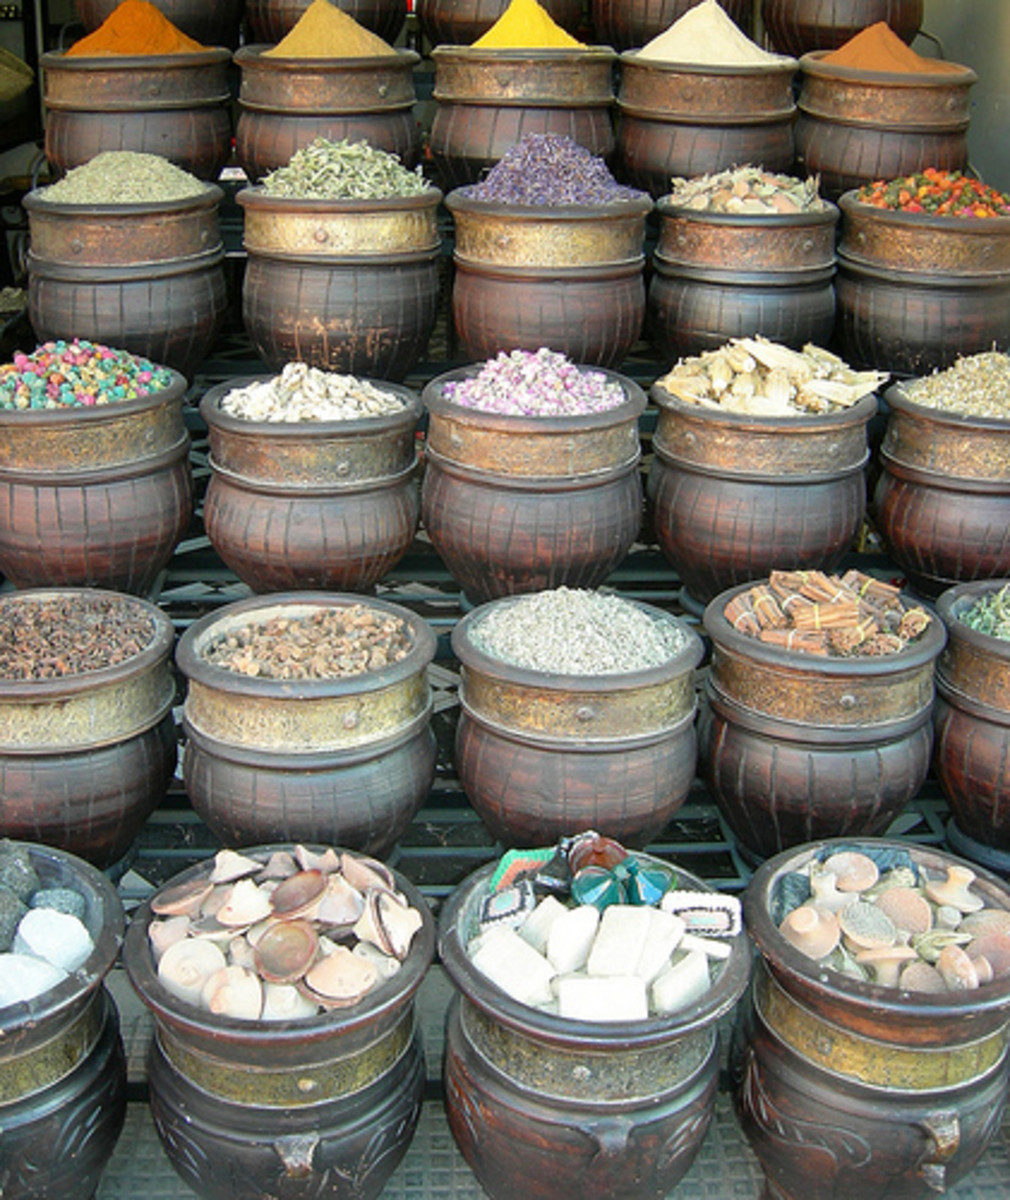 Spice Market (Photo courtesy by Radar Communication from Flickr.com)